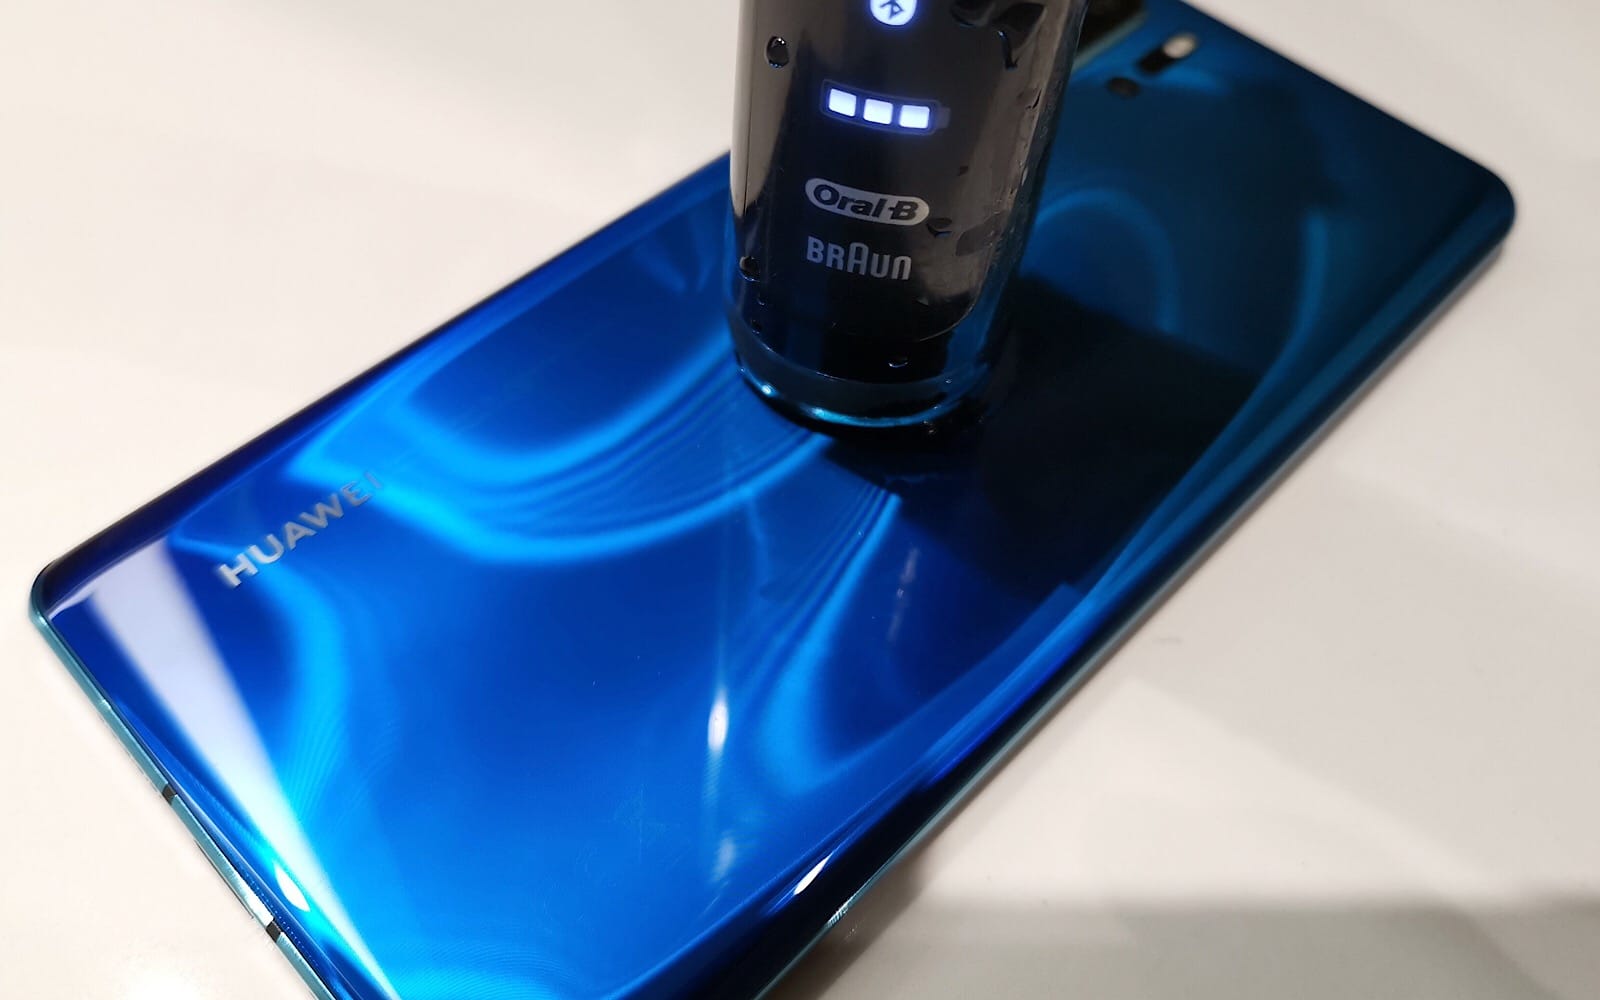 Huawei's P30 Pro recharging an Oral-B electric toothbrush